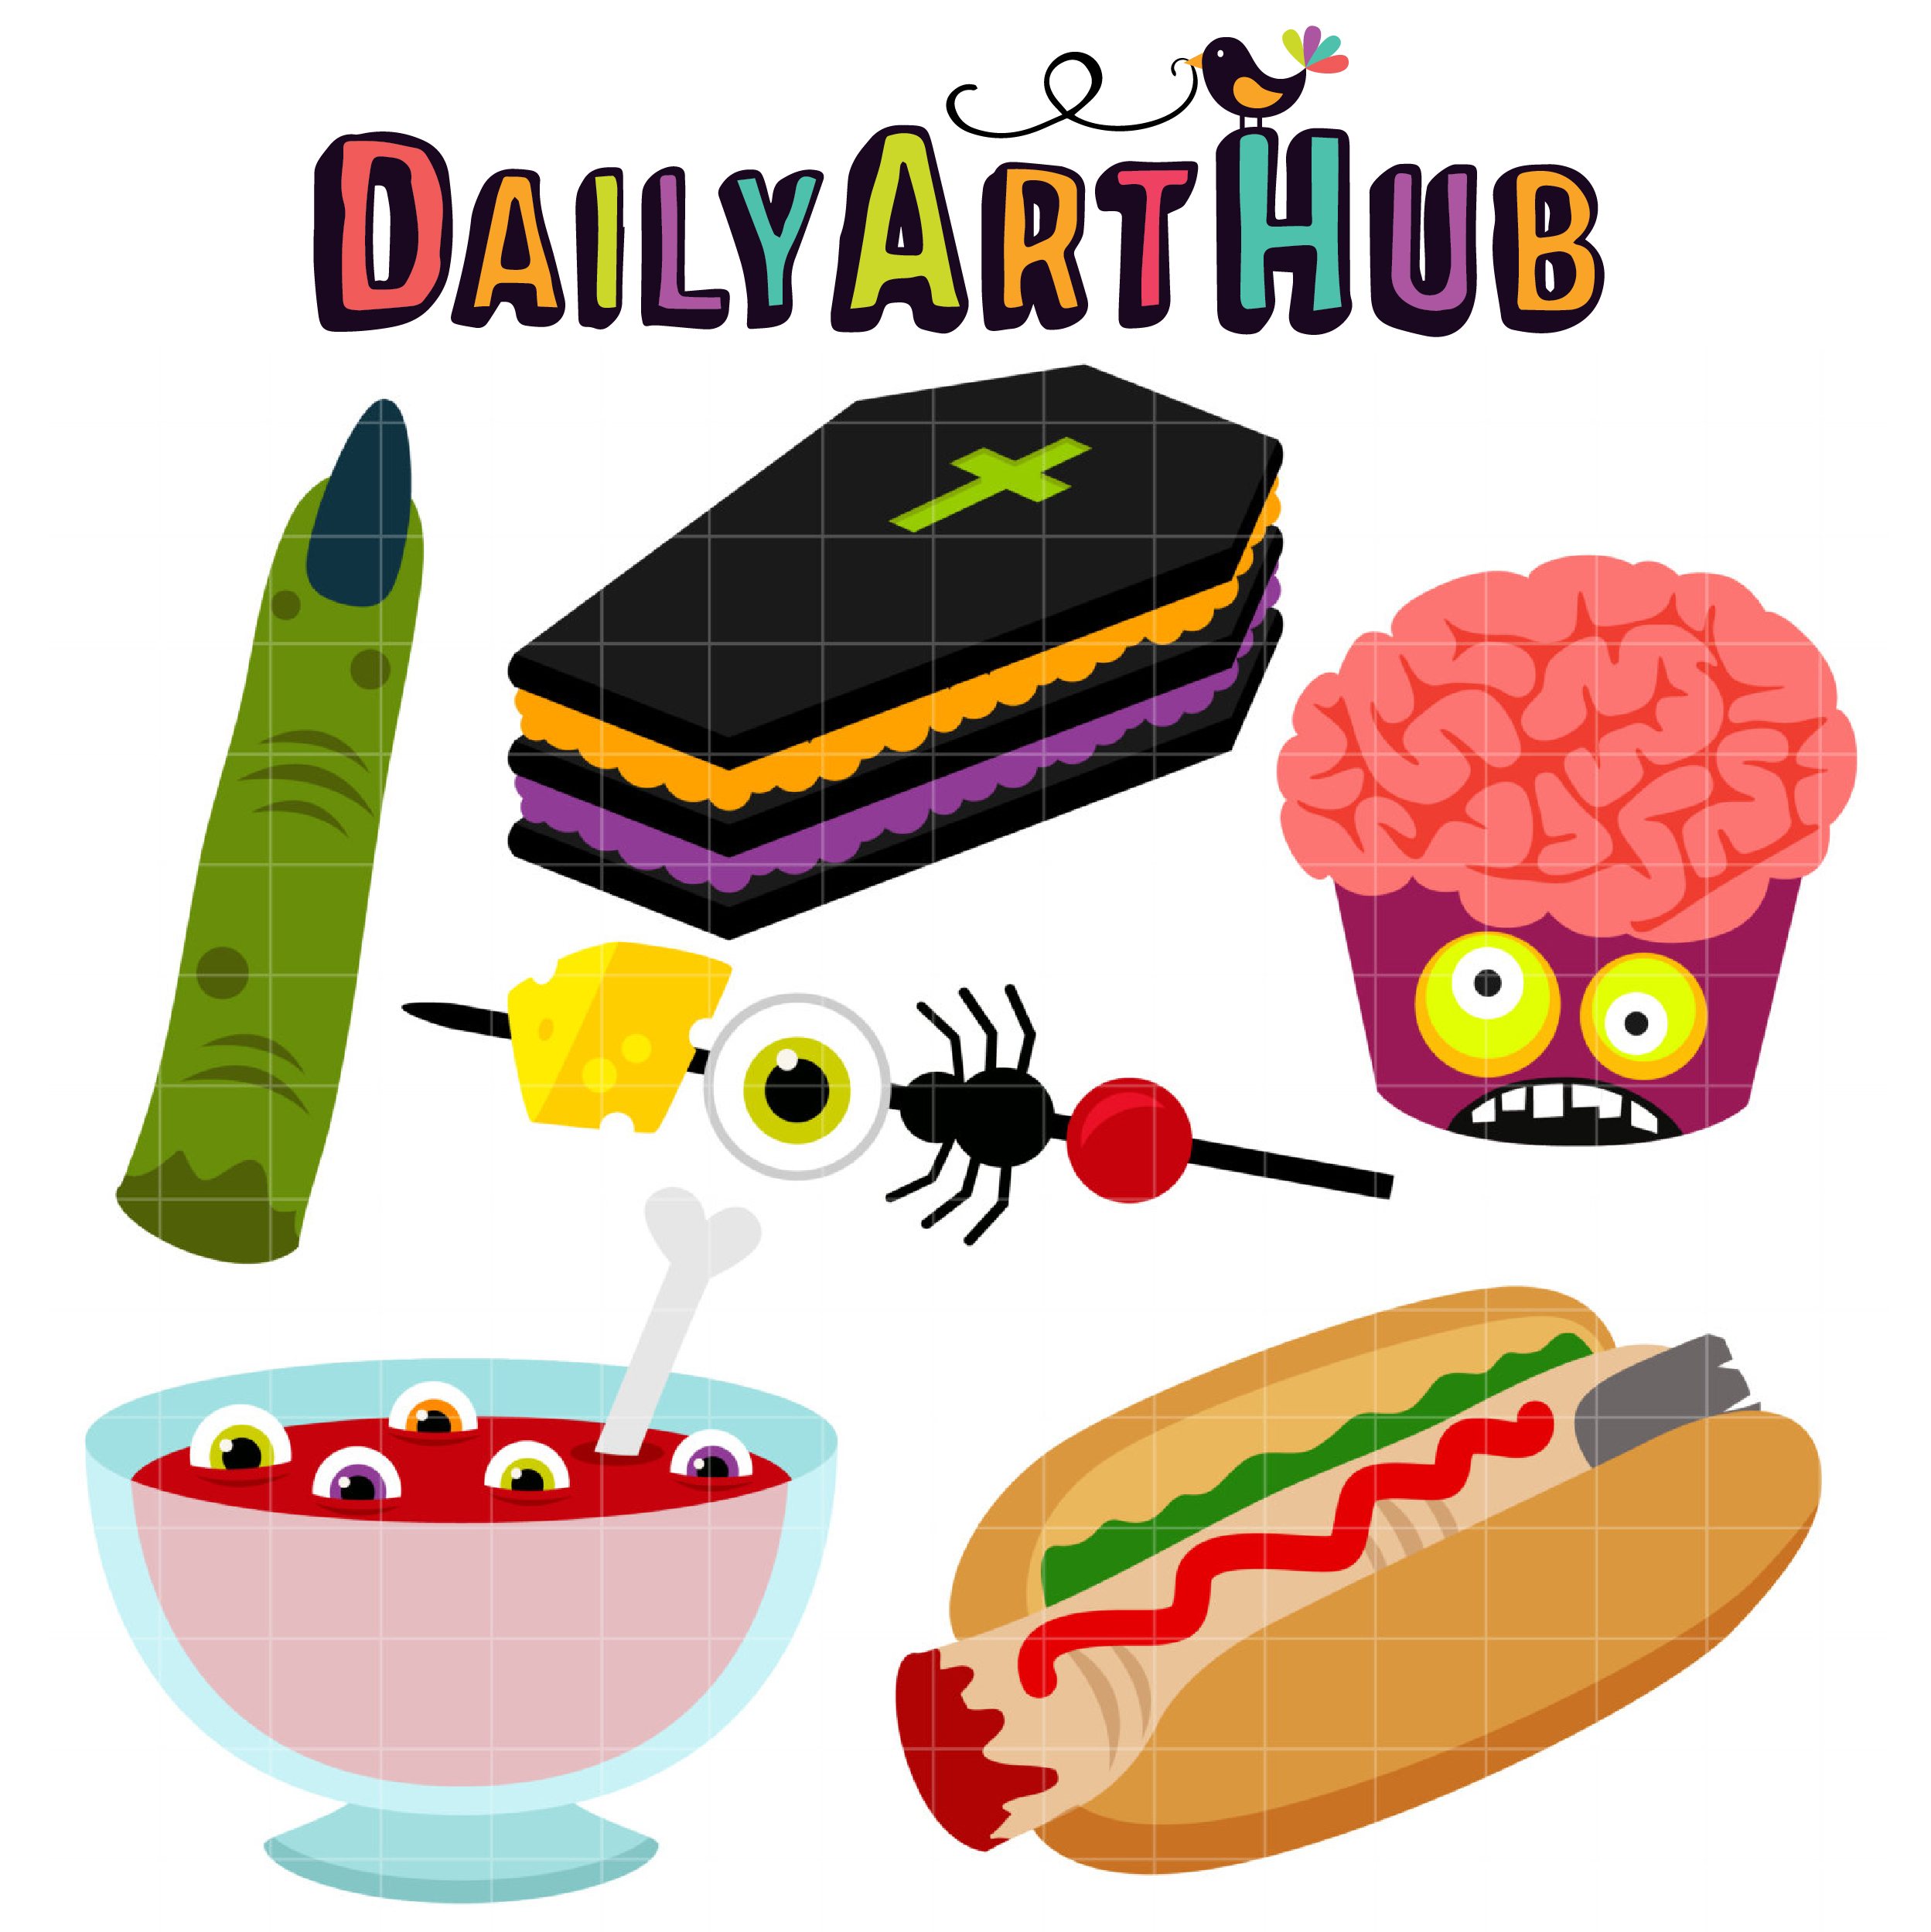 Halloween Party Foods Clip Art Set Daily Art Hub Free Clip Art Everyday